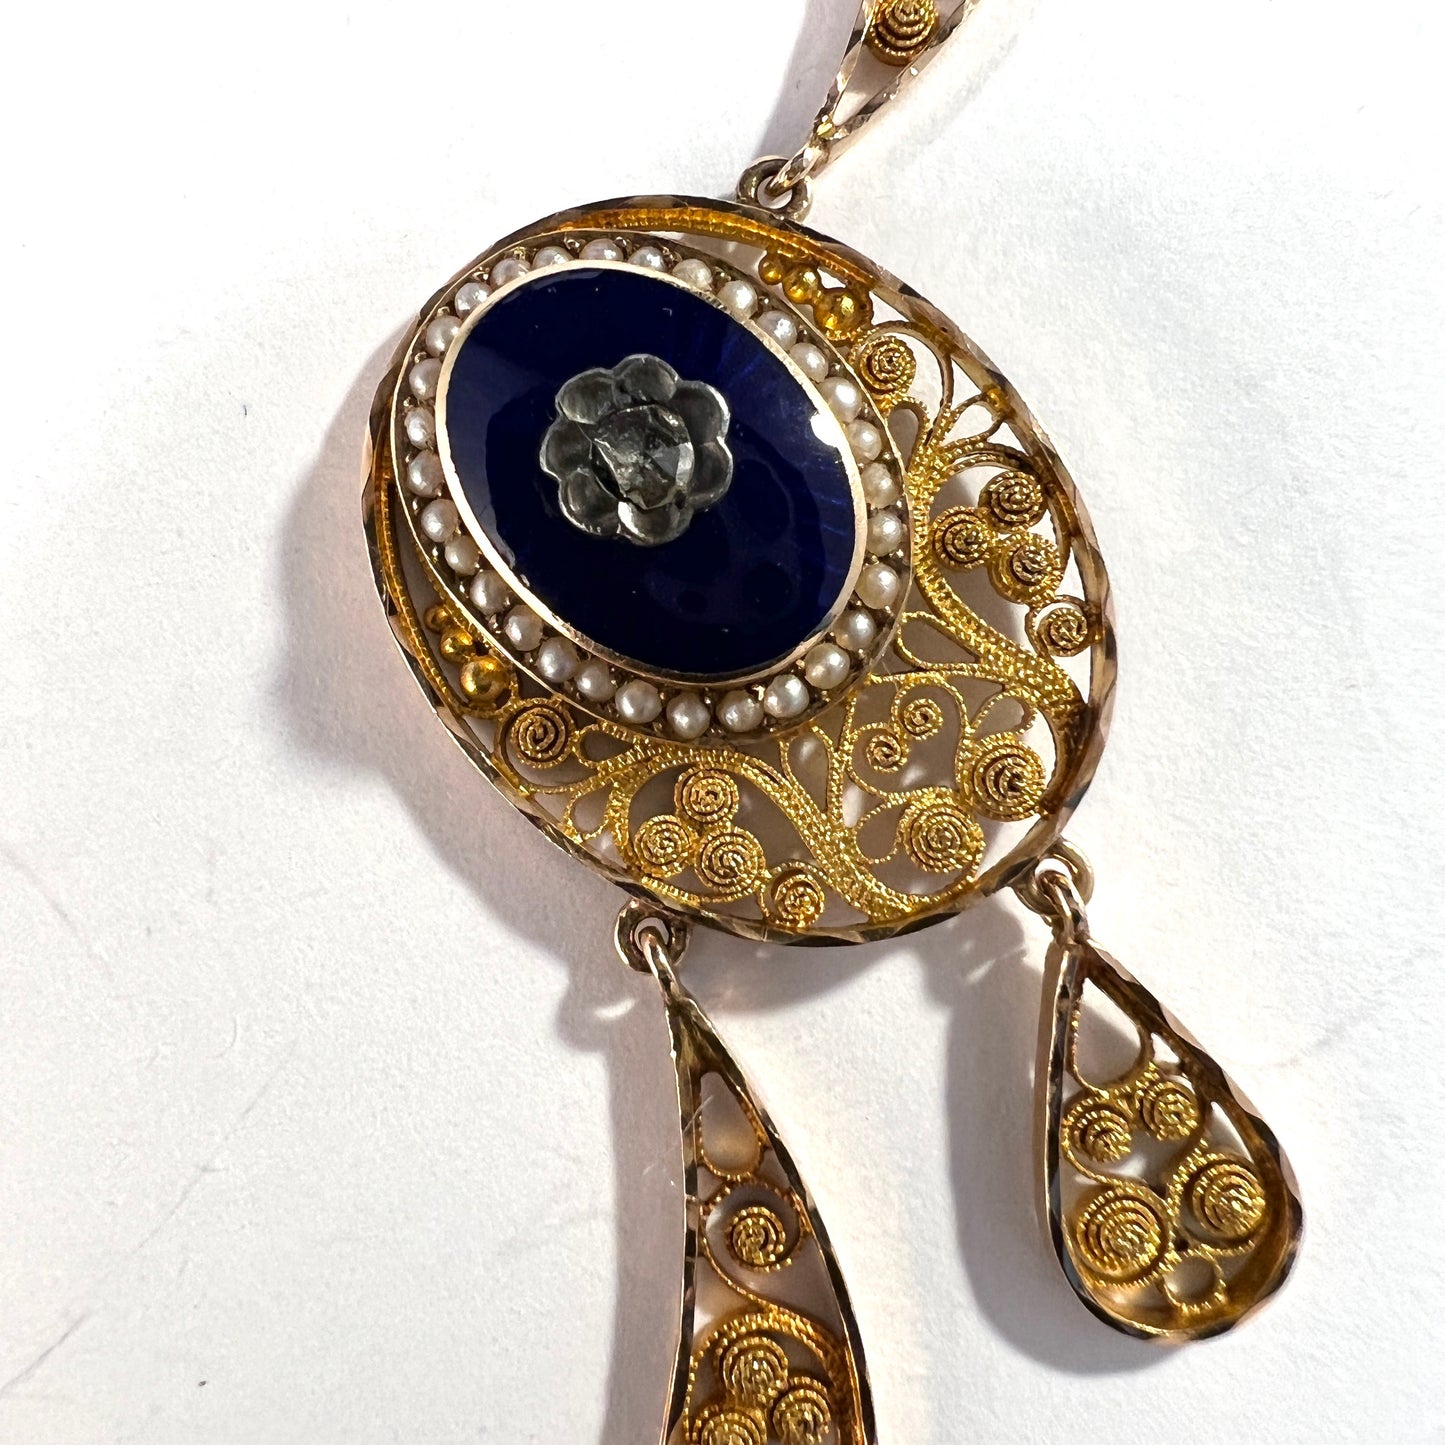 G Dahlgren, Sweden 1907. Antique Edwardian 18k Gold Diamond Enamel Pearl Necklace.